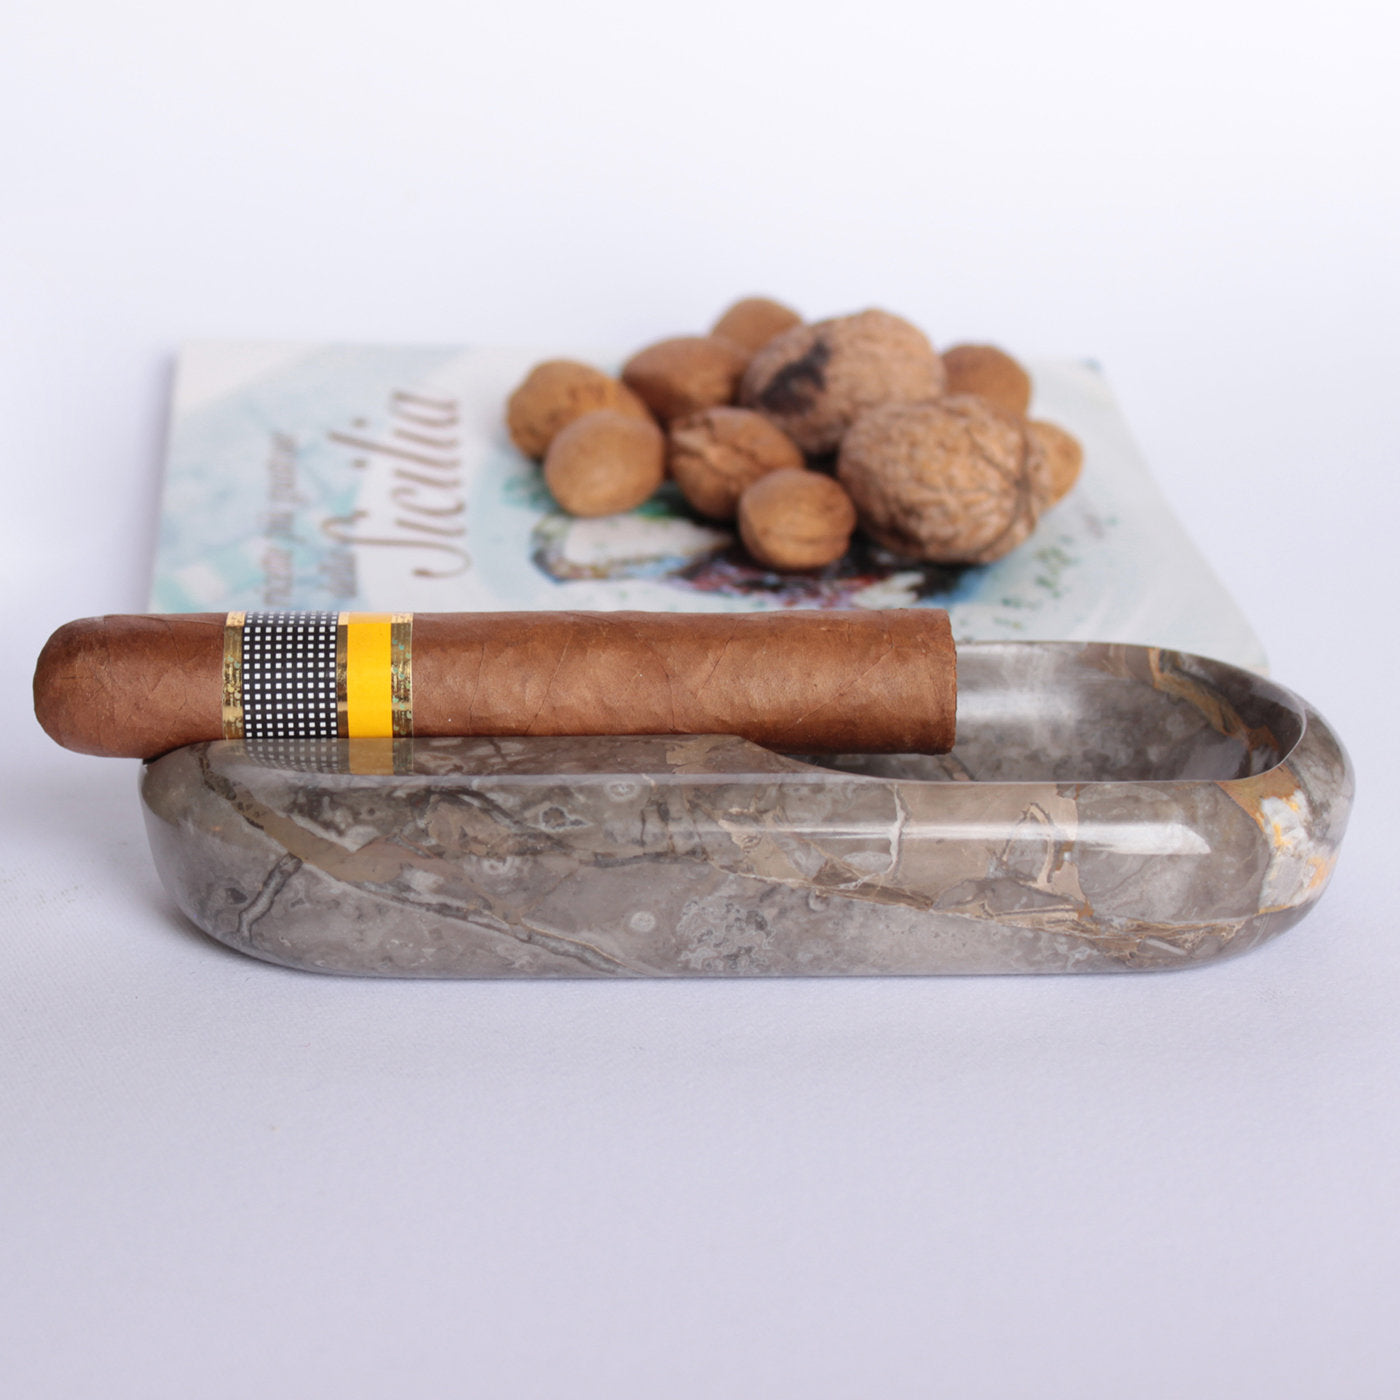 Billiemi Cigar Ashtray with Box - Alternative view 5